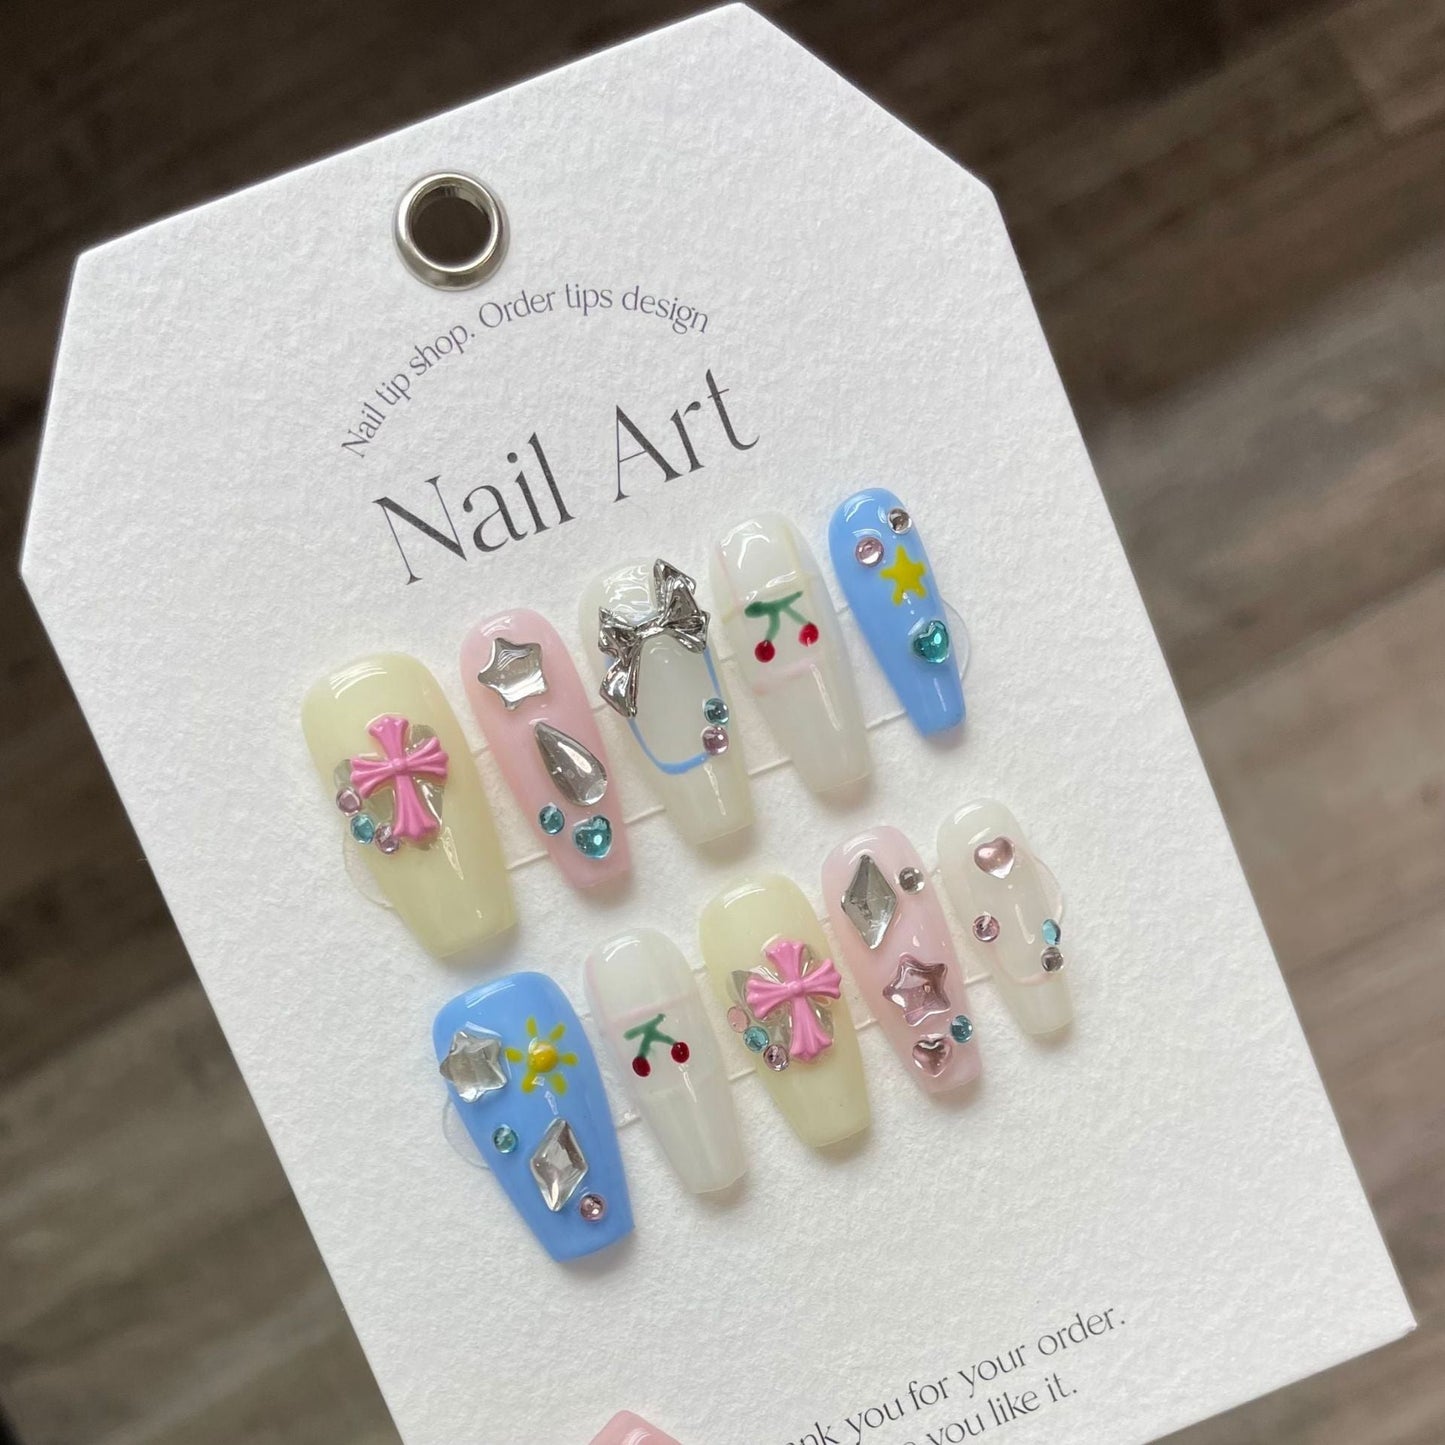 947 Sweet Cherry style press on nails 100% handmade false nails pink white blue